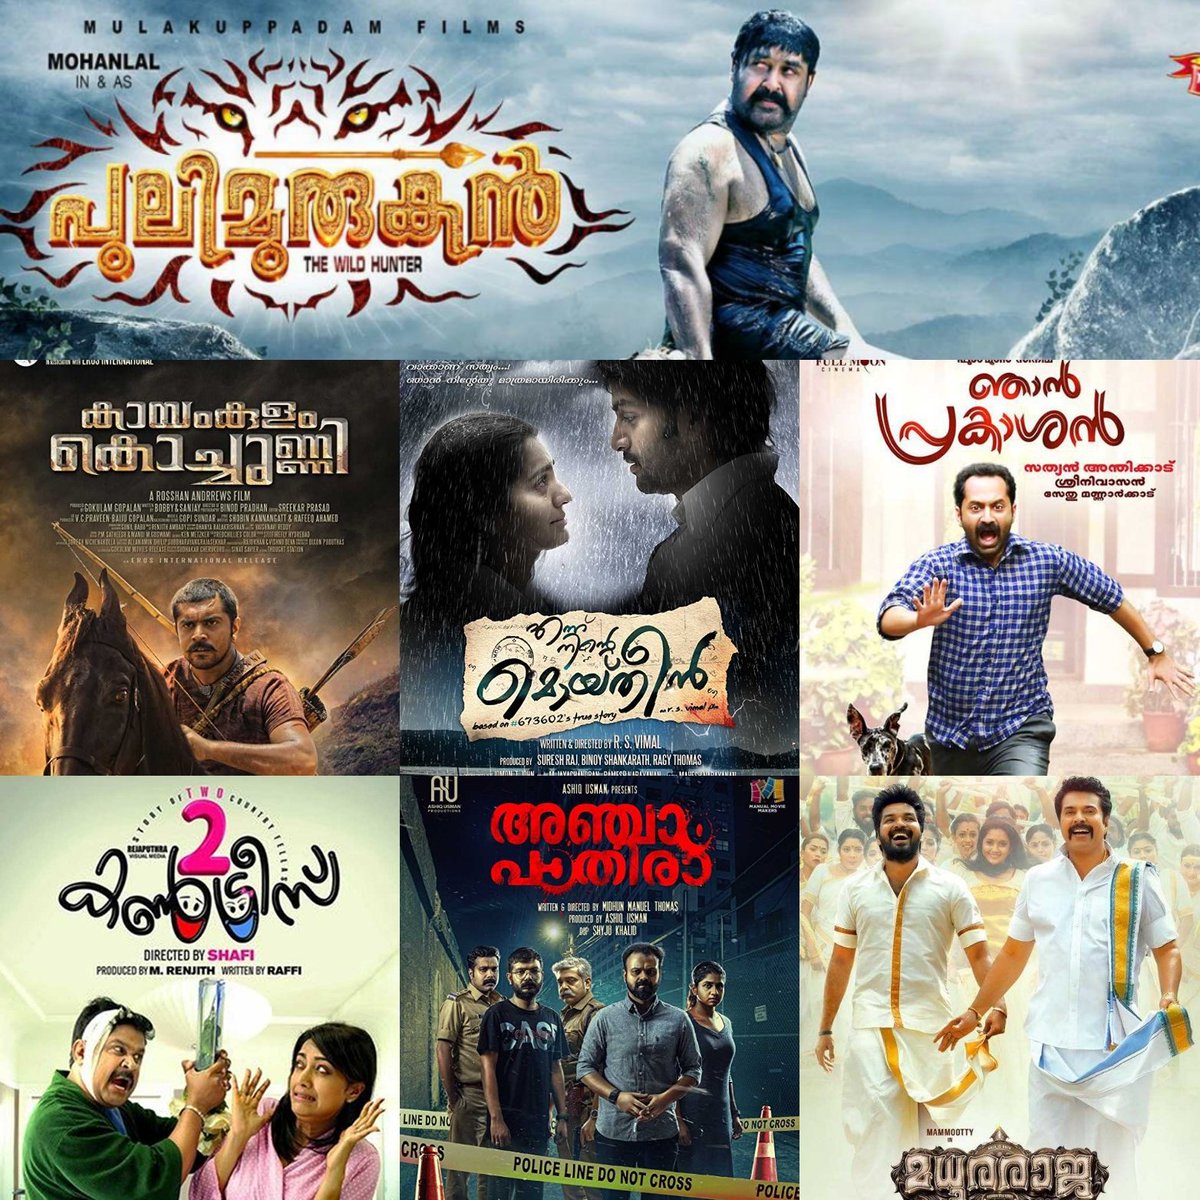 Kerala Box Office Rankings along with their biggest hits:

1️⃣ #Mohanlal (Pulimurugan)
2️⃣ #NivinPauly (KayamkulamKochunni)
3️⃣ #Prithviraj (Ennu Ninte Moideen)
4️⃣ #FahadFazil (Njan Prakashan)
5️⃣ #Dileep (Two Countries)
6️⃣ #KunchakoBoban (Ancham Paathira)
7️⃣ #Mammootty (MadhuraRaja)